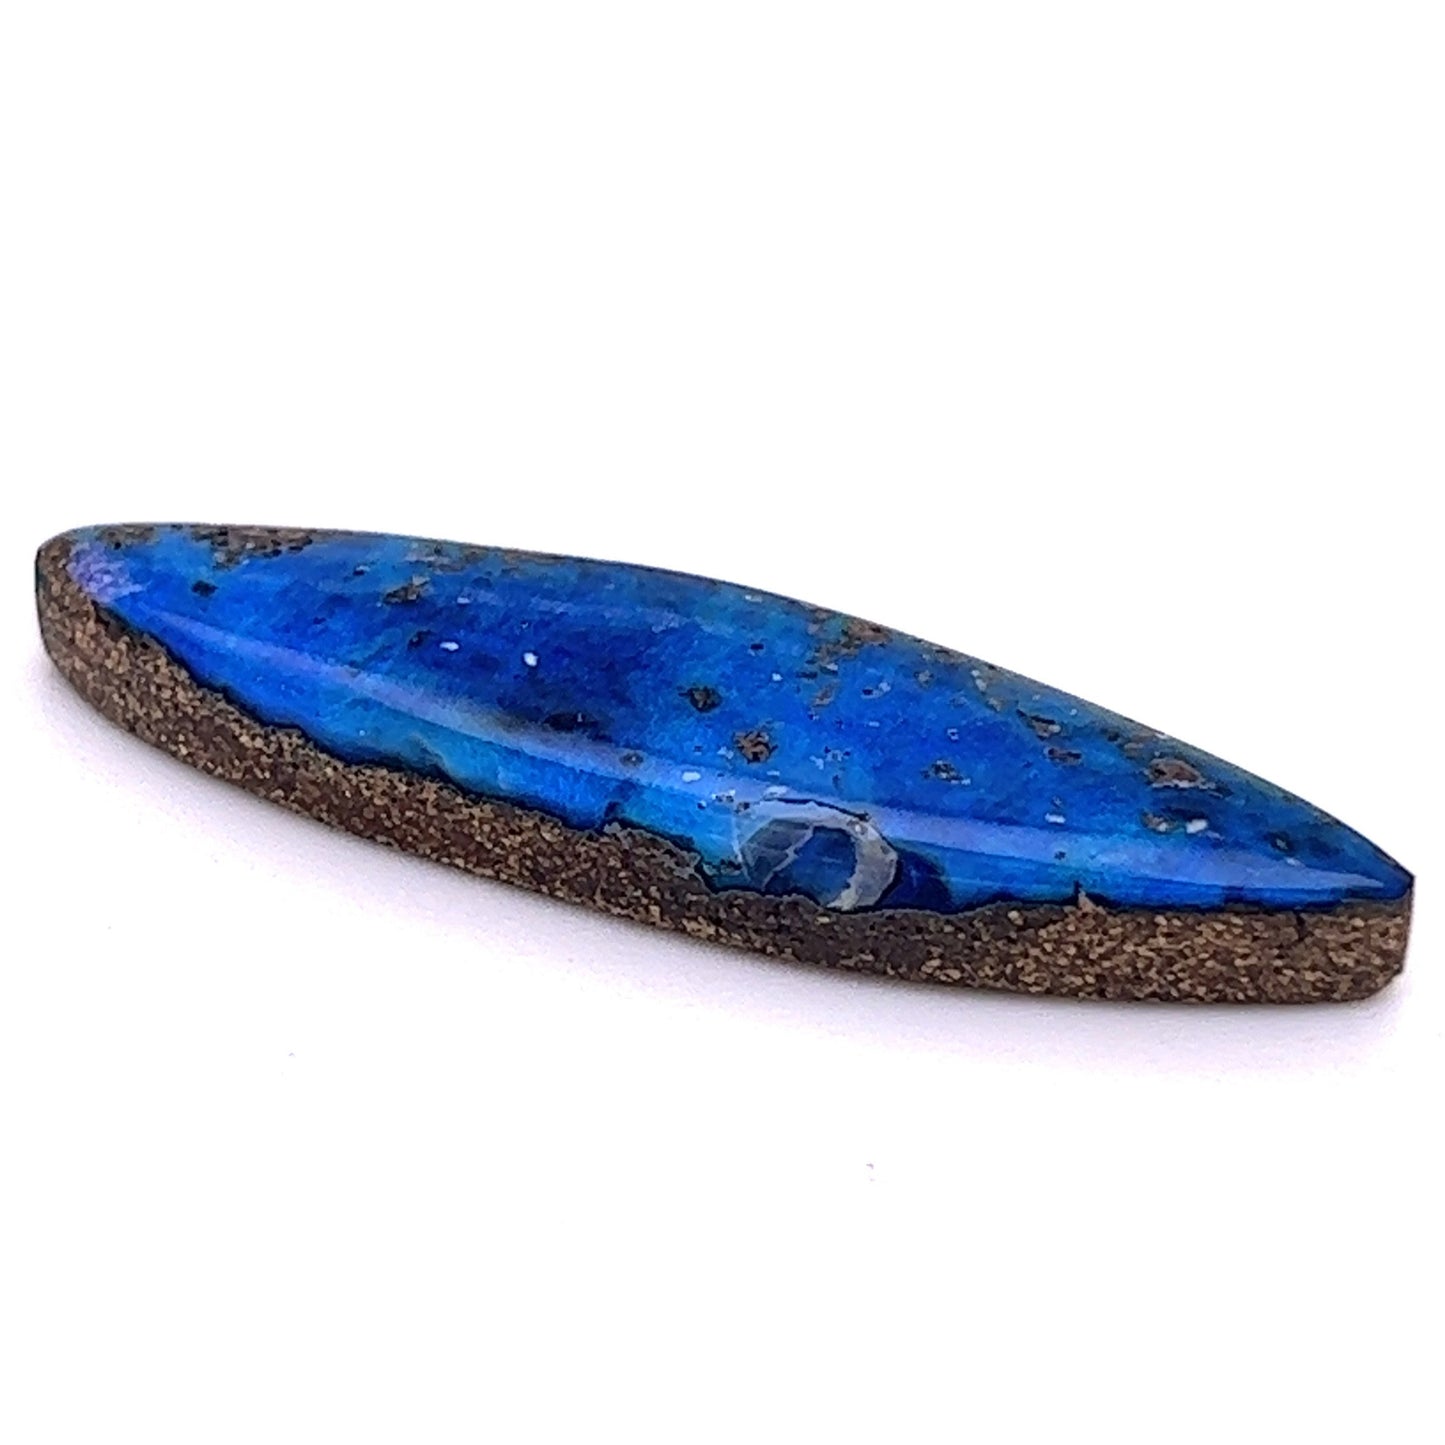 Beautiful blue boulder opal from Winton.